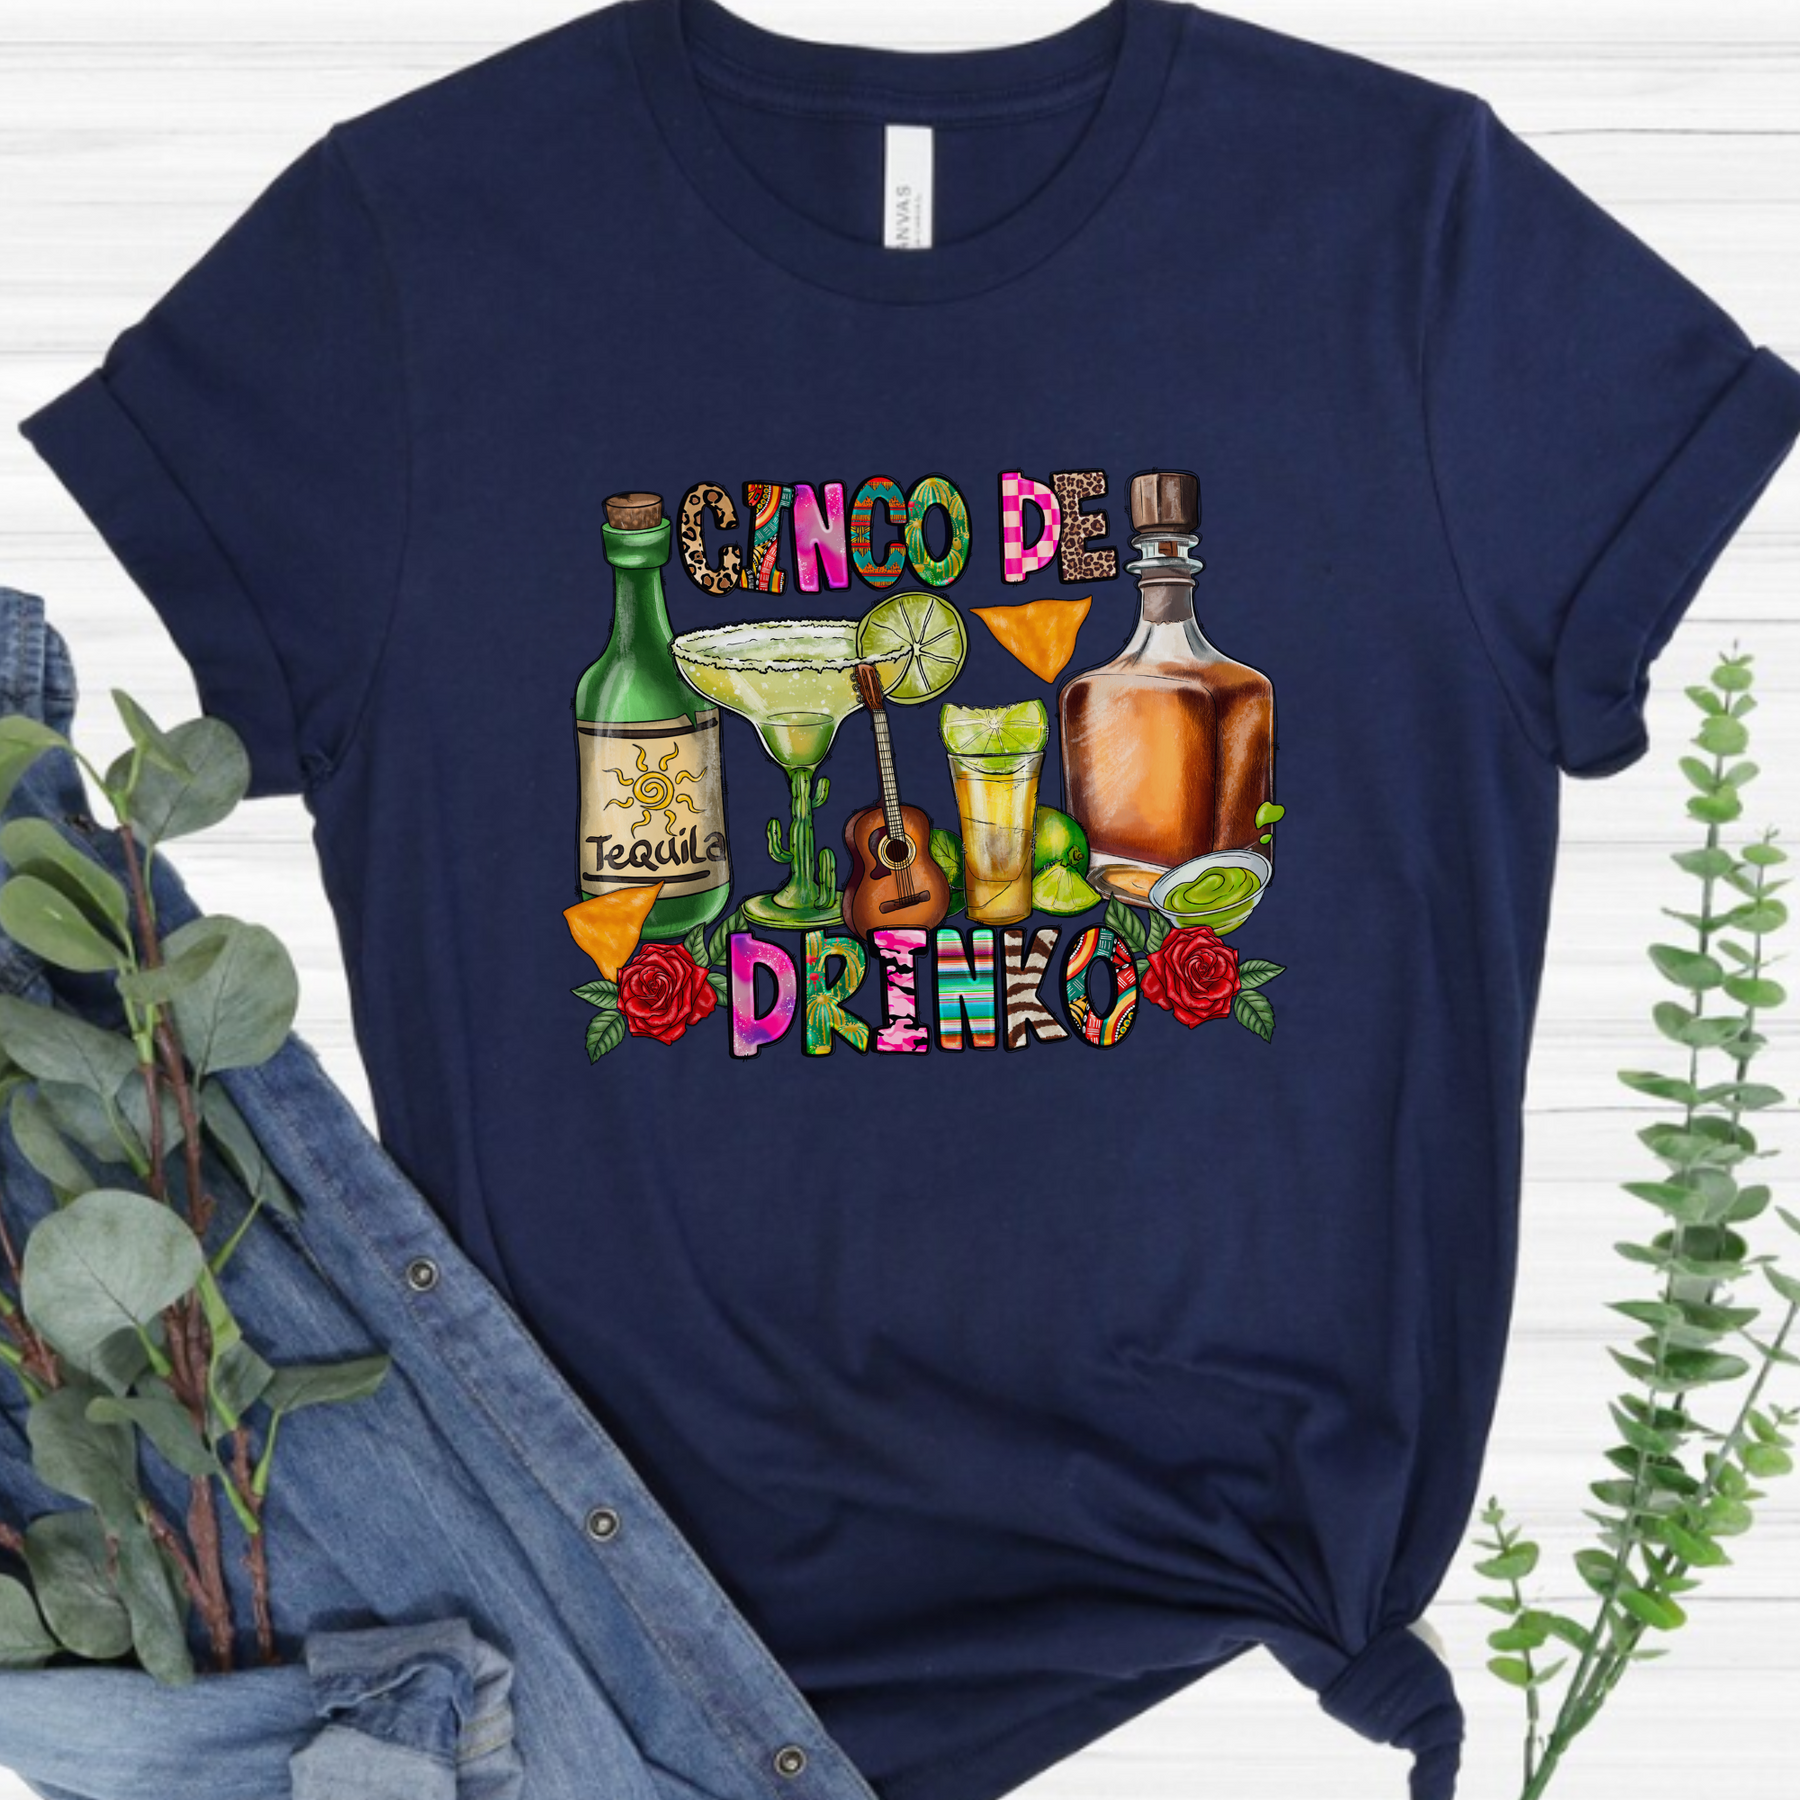 Cinco De Mayo Drinking Shirt - Gift For Margarita Drinker